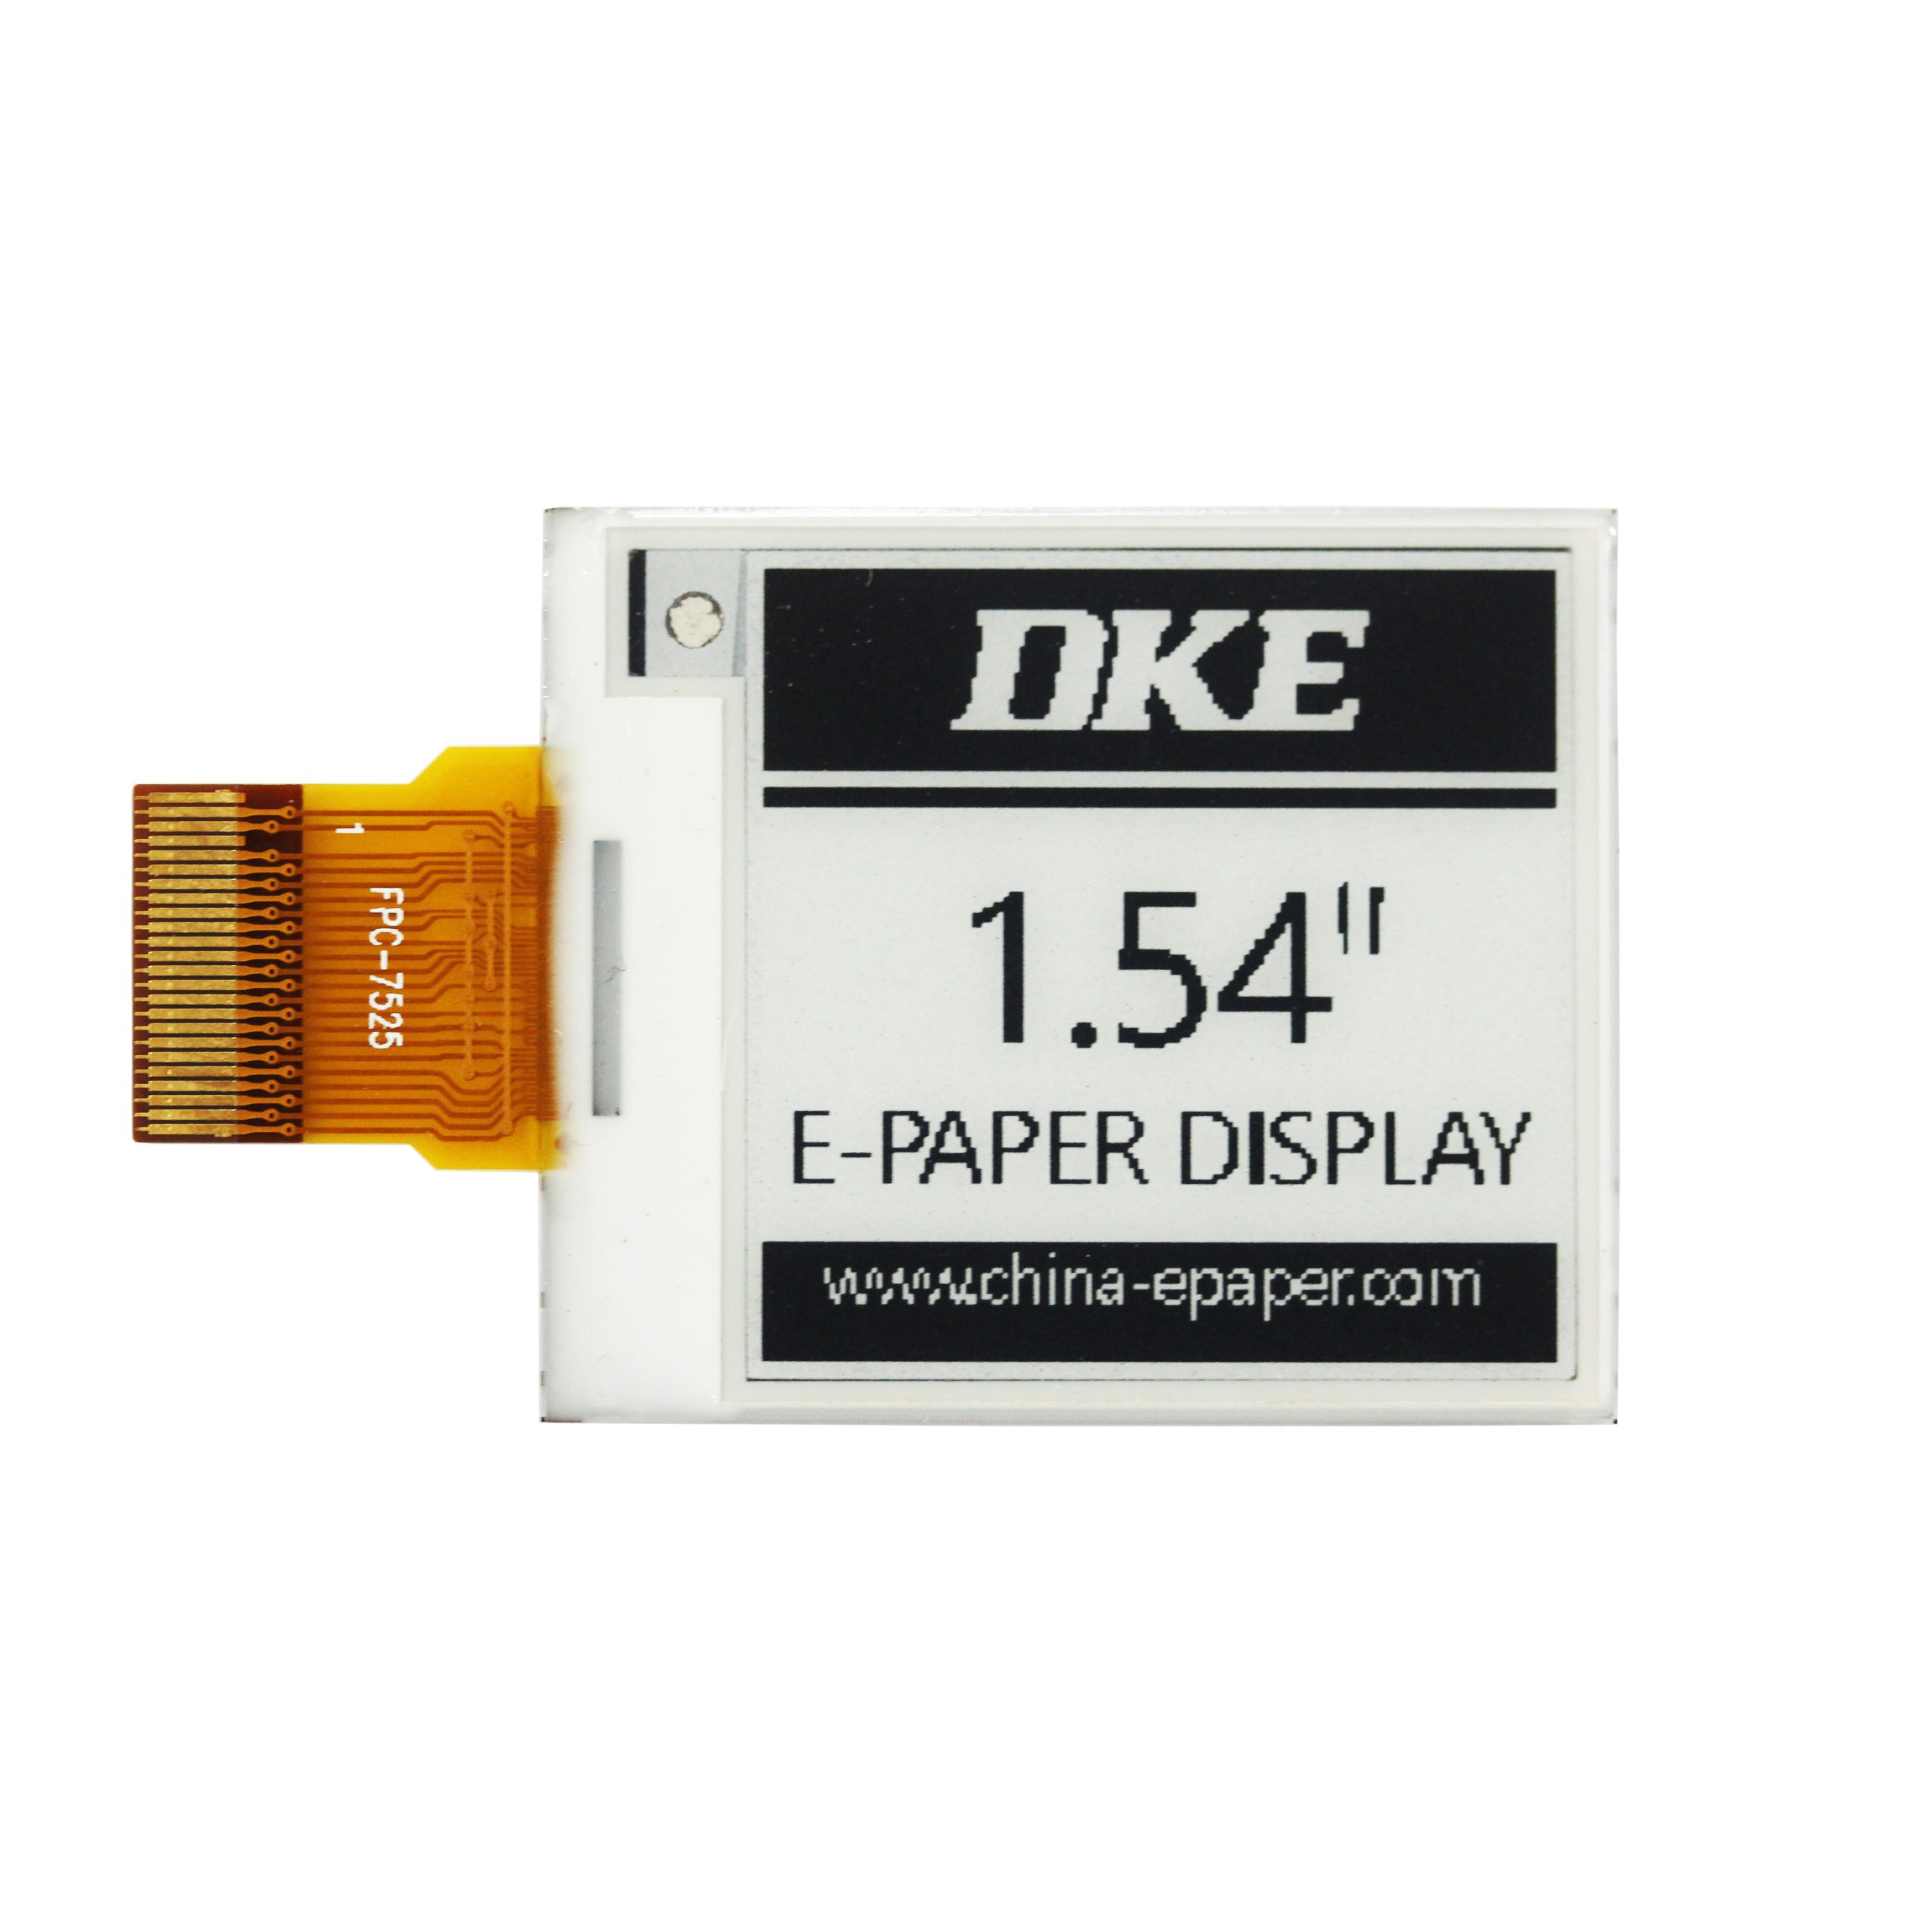 DKE 1.54 Inch Epaper Display